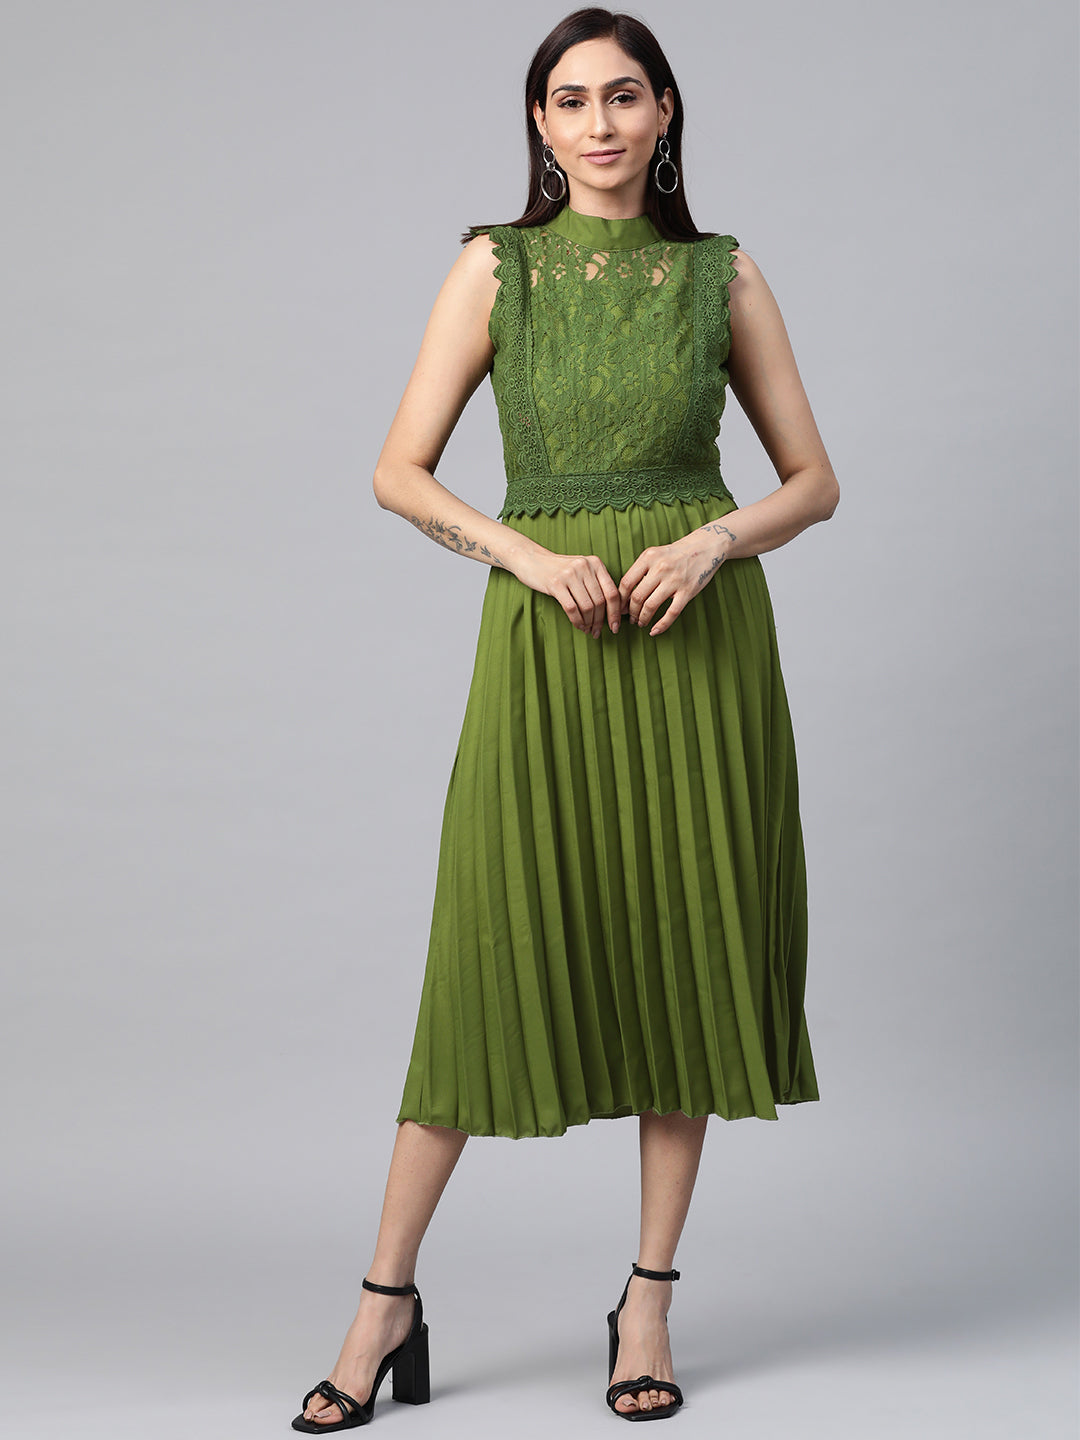 Buy Olive Green & Beige Printed Dress Online - RK India Store View